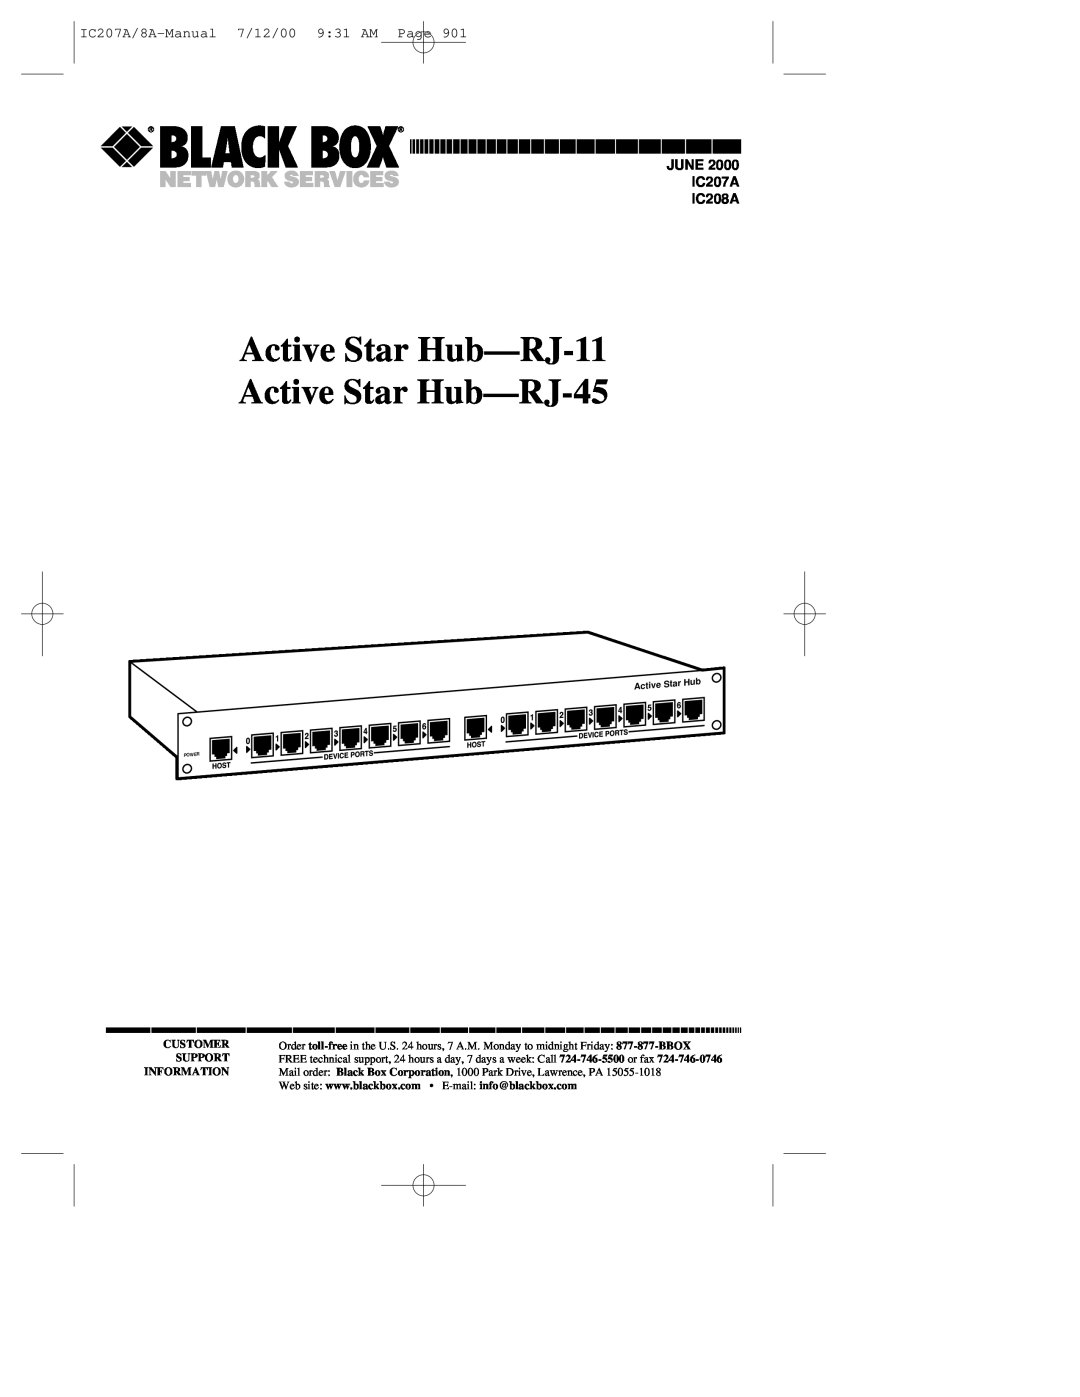 Black Box manual Active Star Hub-RJ-11 Active Star Hub-RJ-45, IC207A/8A-Manual7/12/00 9 31 AM Page, Customer, Support 